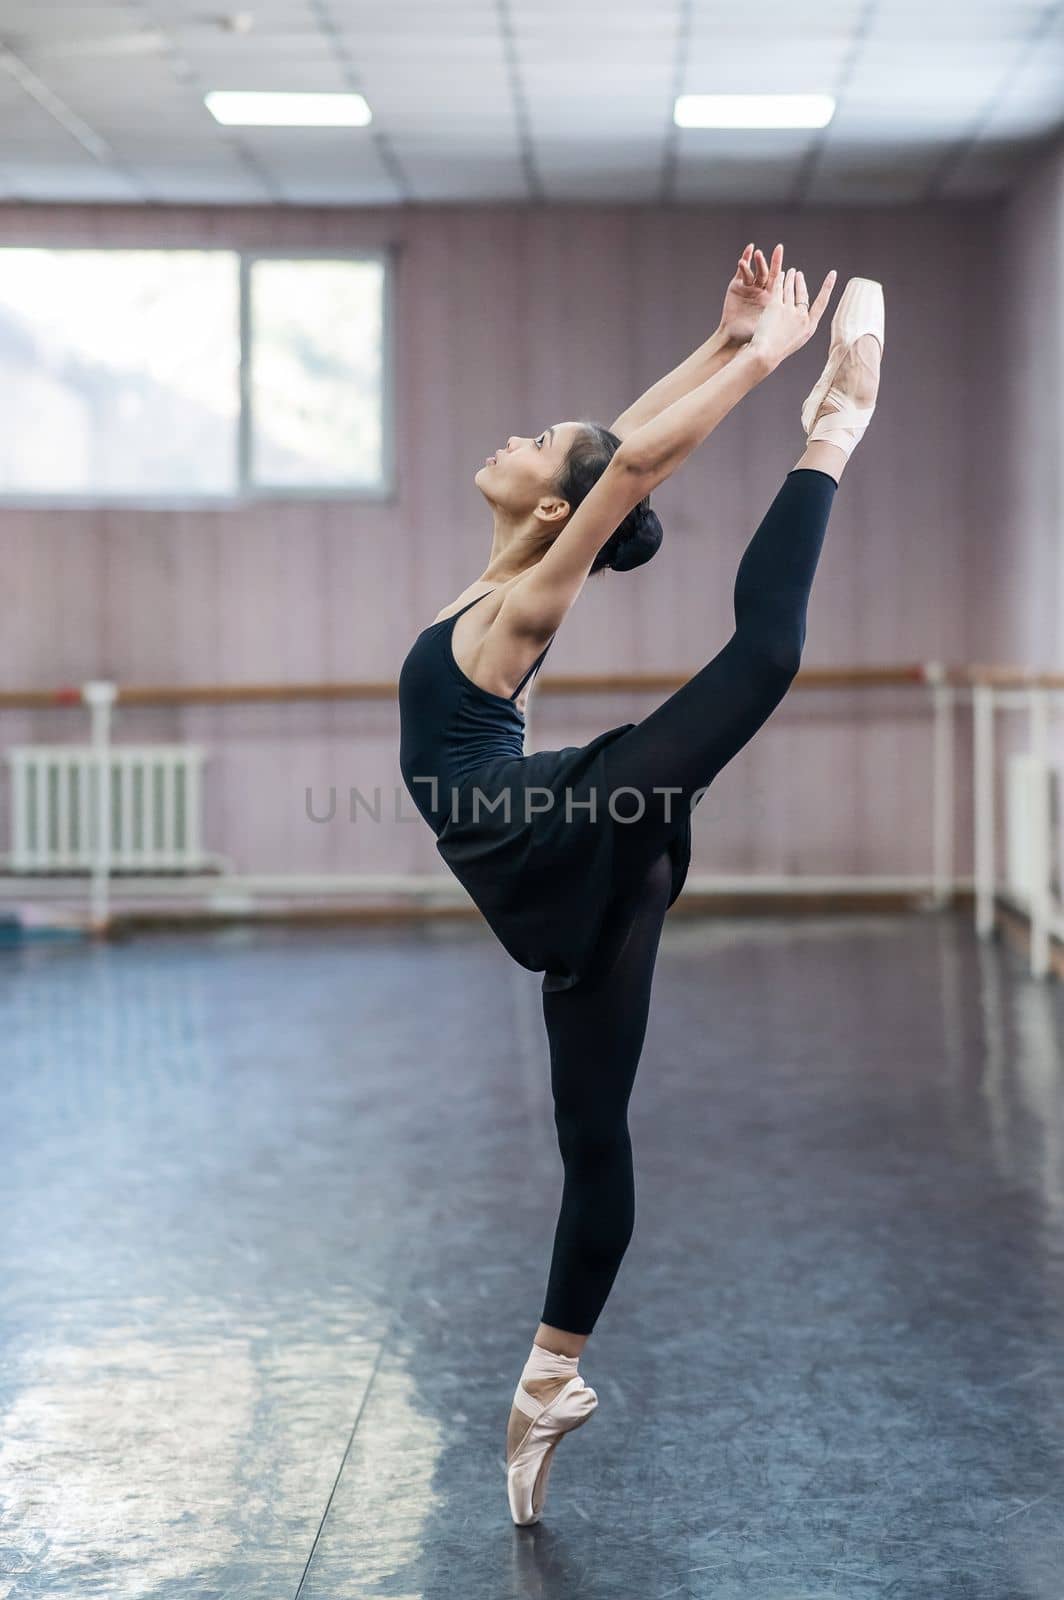 Asian woman dancing in ballet class doing bilman pose. by mrwed54